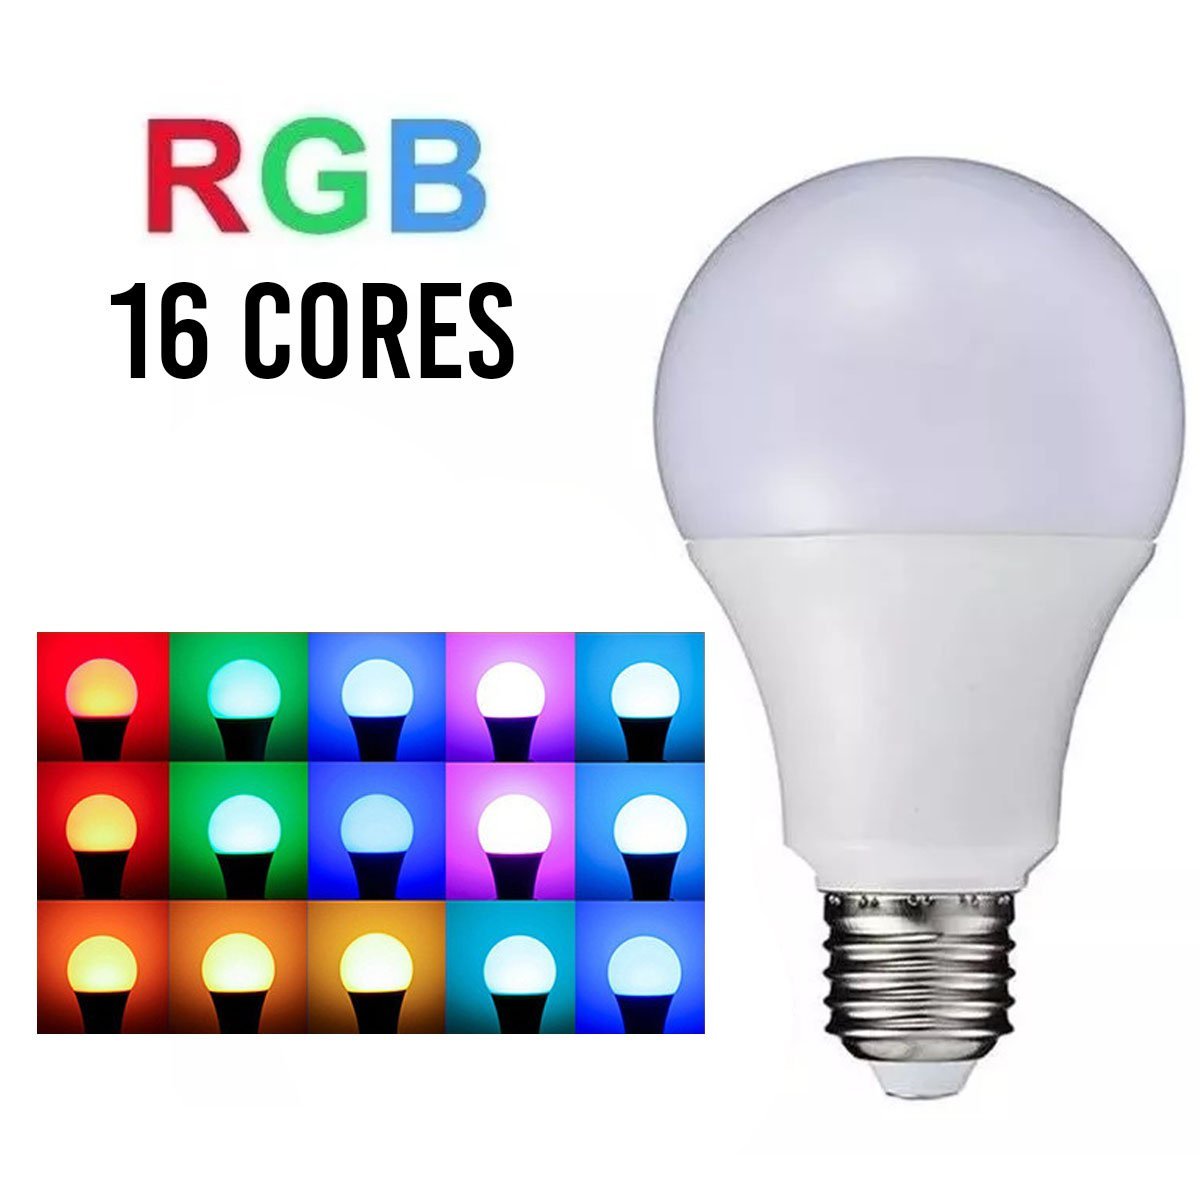 Lampada Led Colorida RGB 16 Cores 9W Controle Remoto Ajustavel Decoraçao Sala Quarto Salao Festa Ilu - 4